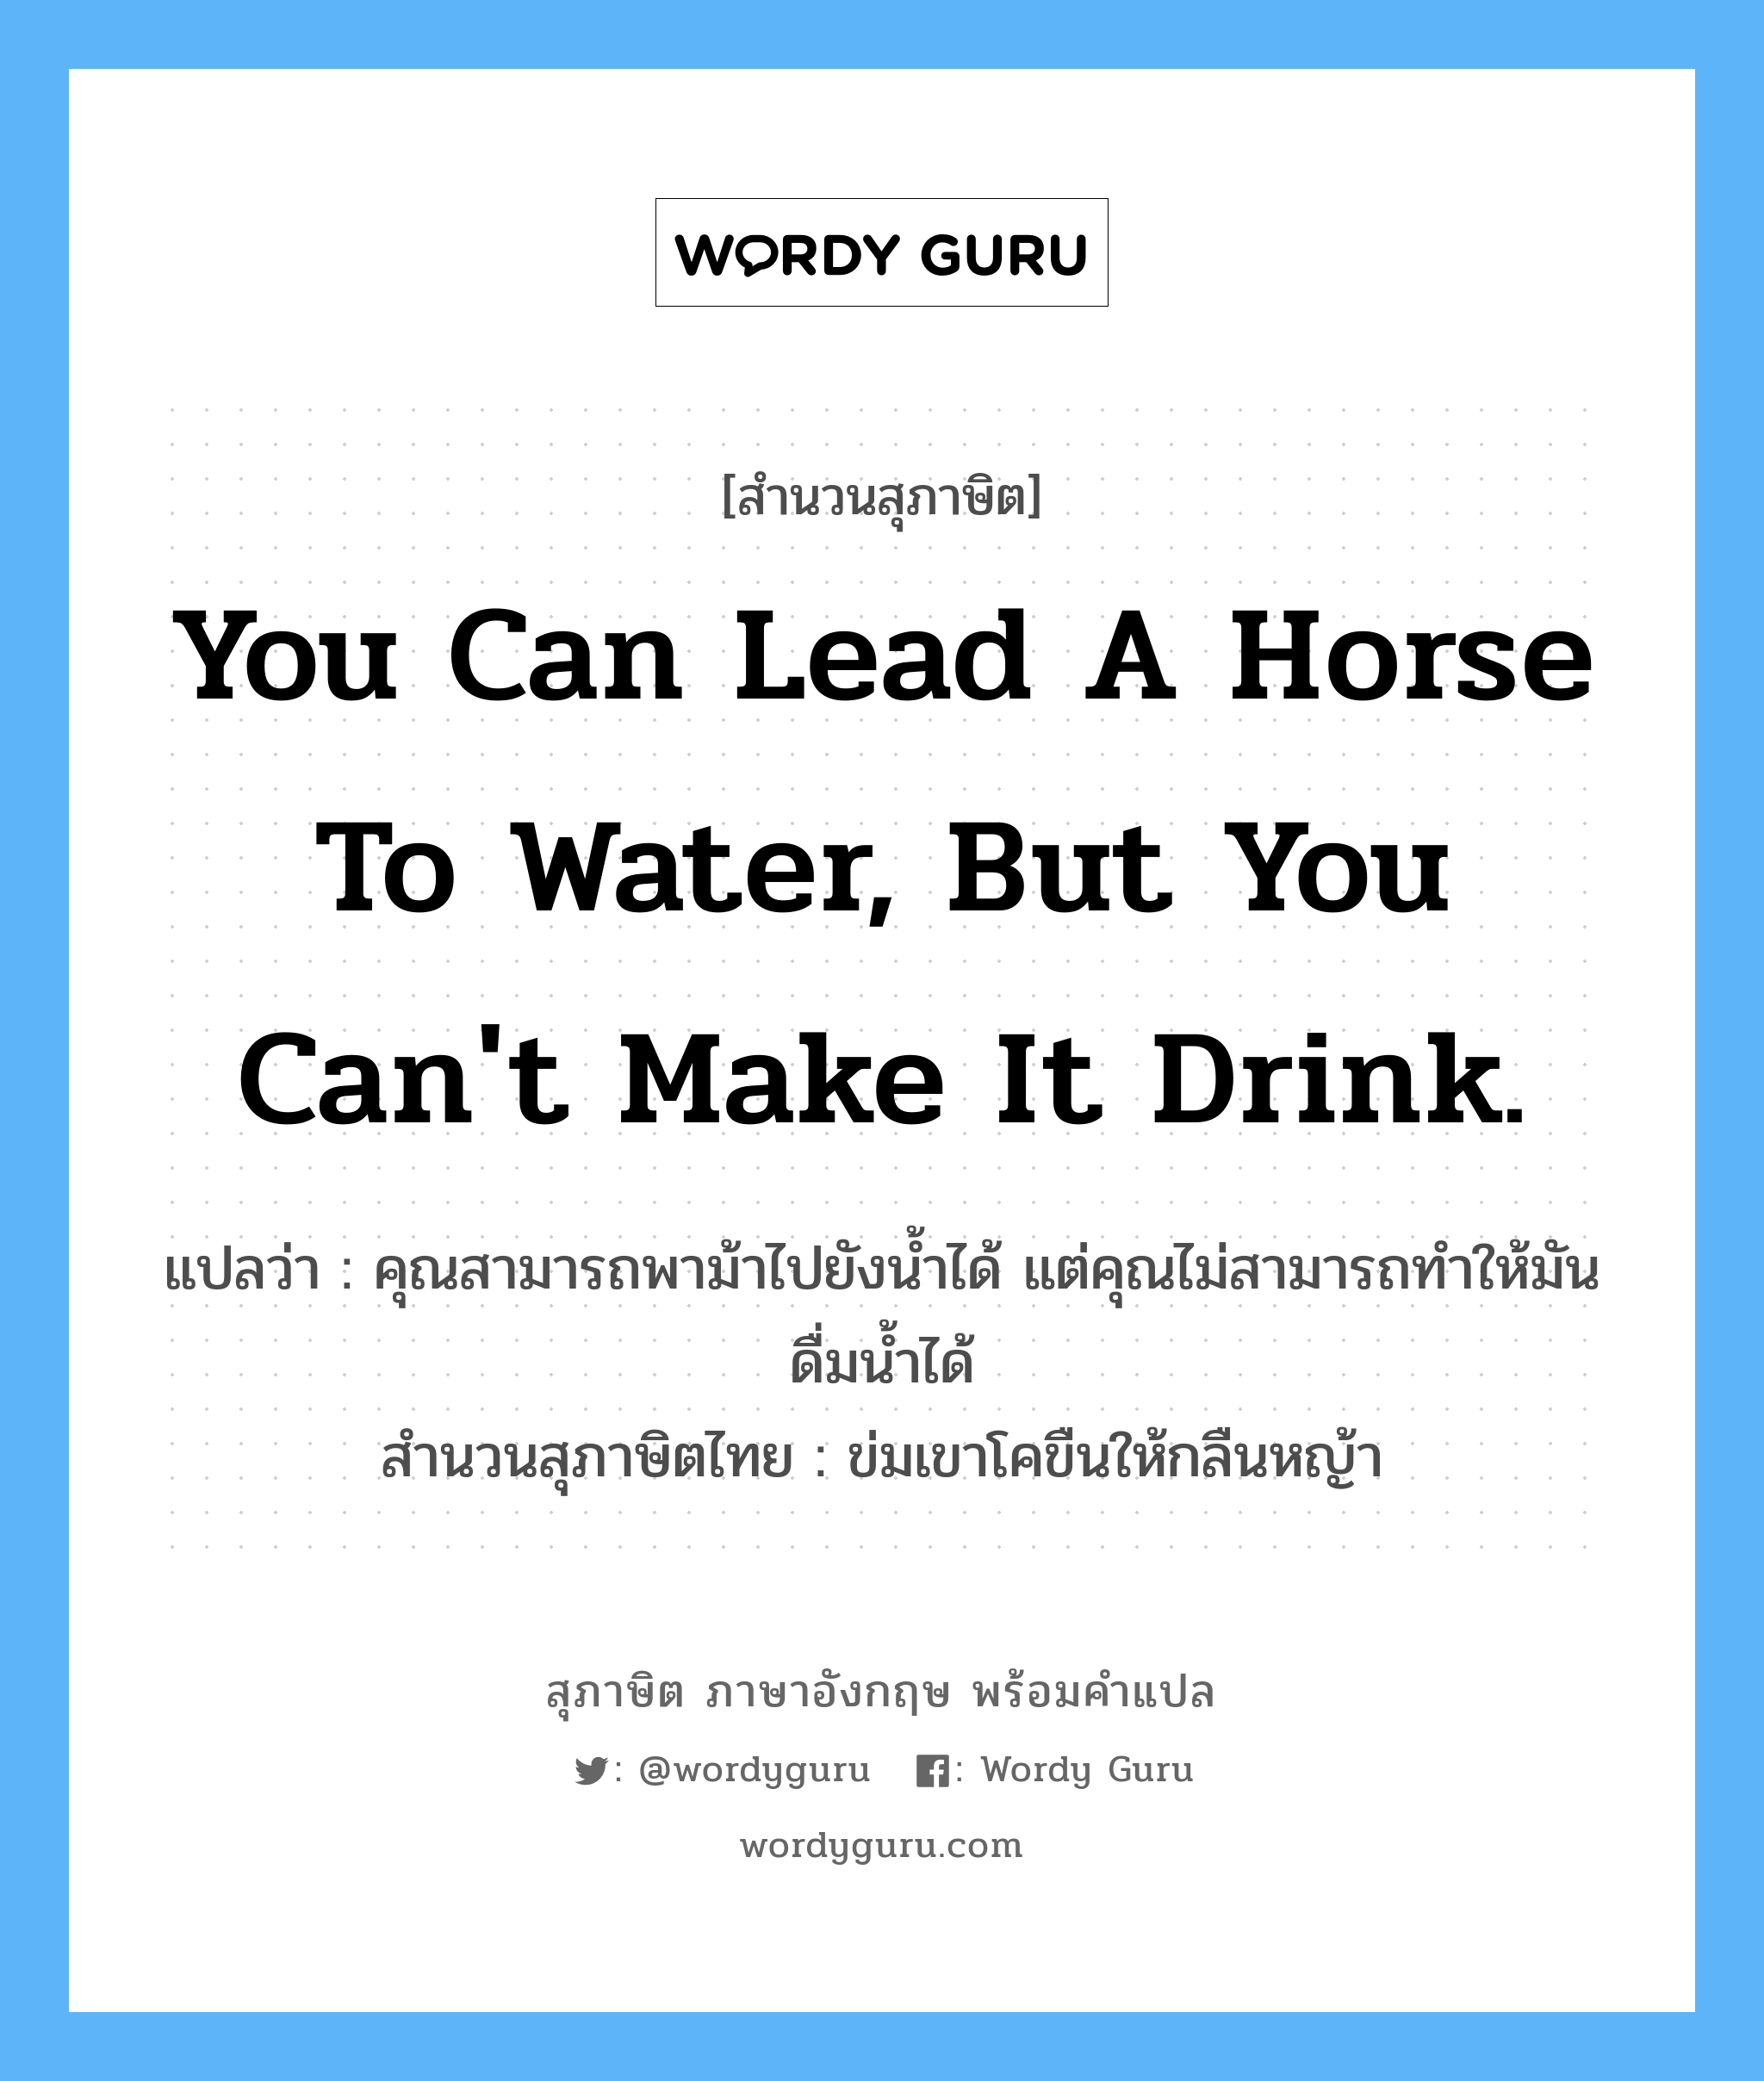 You can lead a horse to water, but you can't make it drink. แปลว่า?, สำนวนสุภาษิต ภาษาอังกฤษ You can lead a horse to water, but you can't make it drink. แปลว่า คุณสามารถพาม้าไปยังน้ำได้ แต่คุณไม่สามารถทำให้มันดื่มน้ำได้ สำนวนสุภาษิตไทย ข่มเขาโคขืนให้กลืนหญ้า